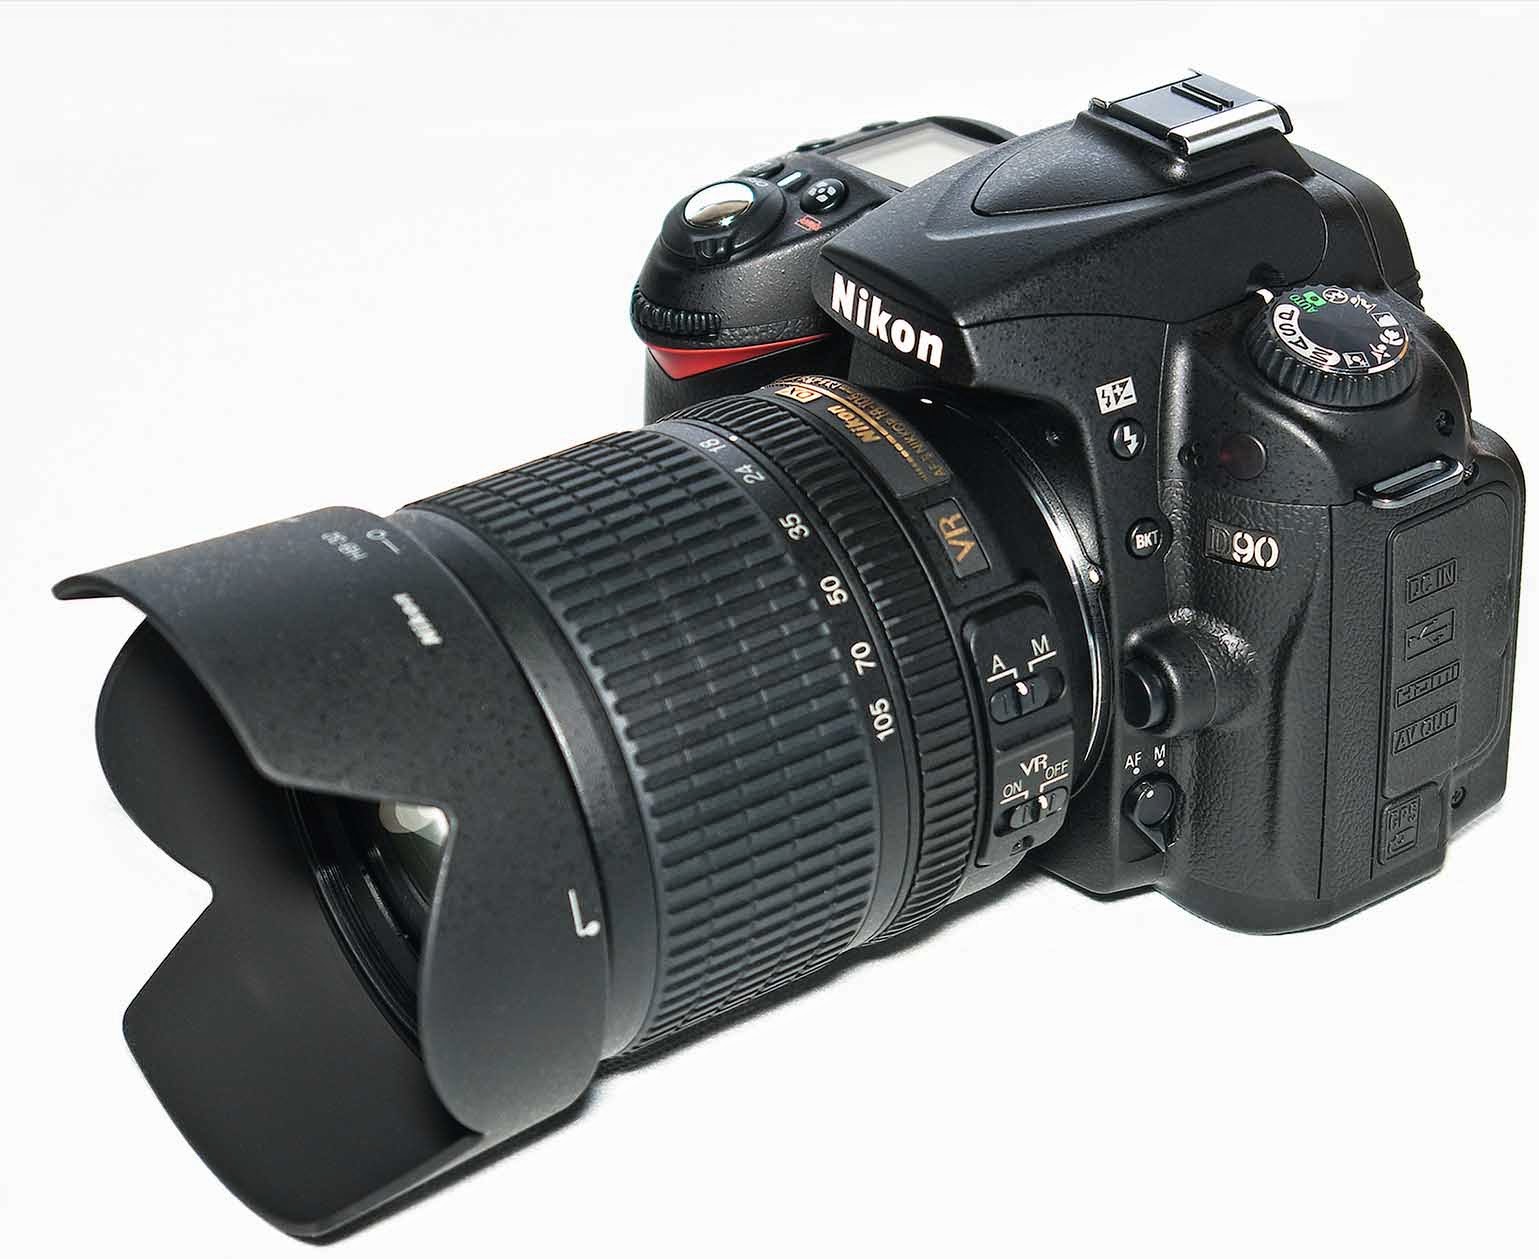 April 2014 Daftar Harga Kamera SLR DSLR Nikon Terbaru THE SHARE